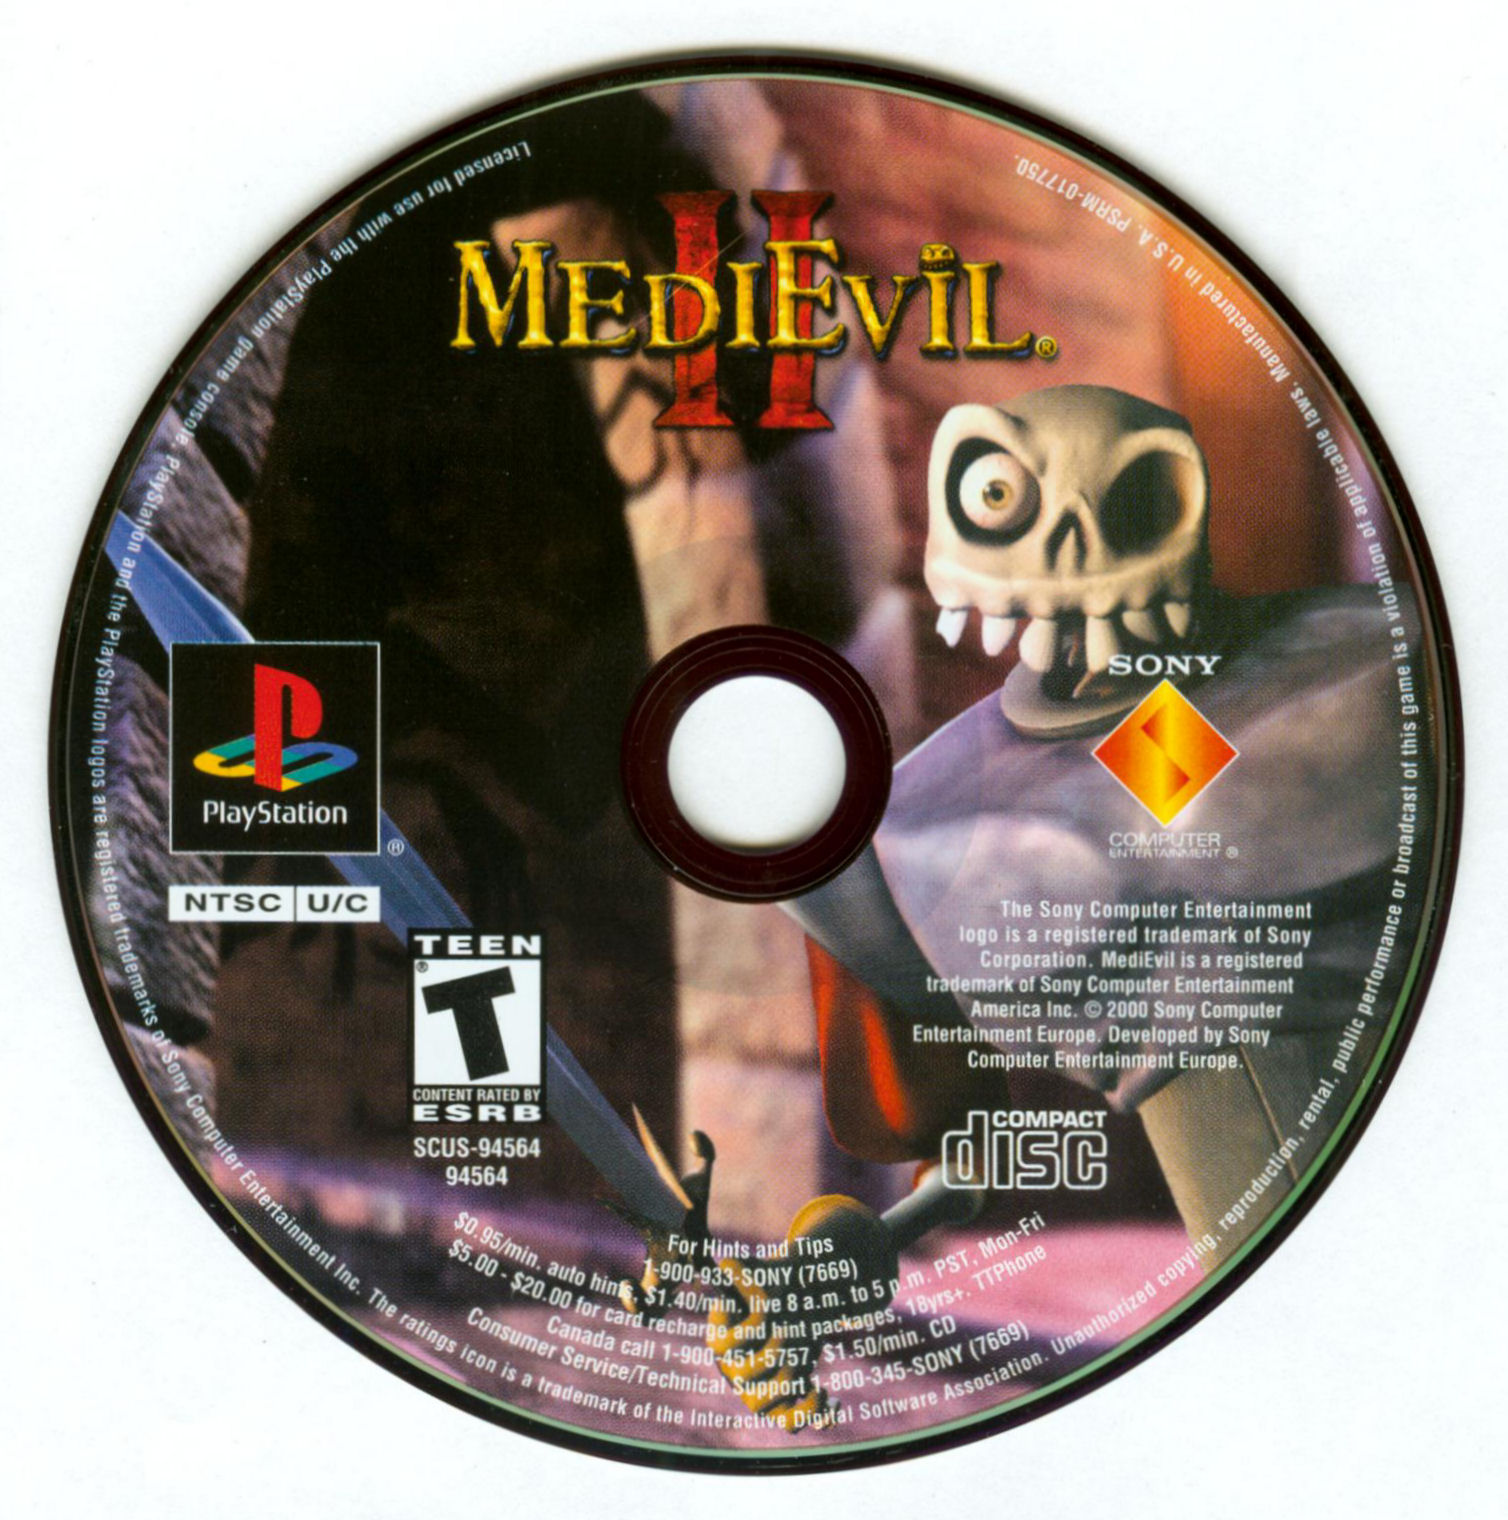 Medievil II PSX cover